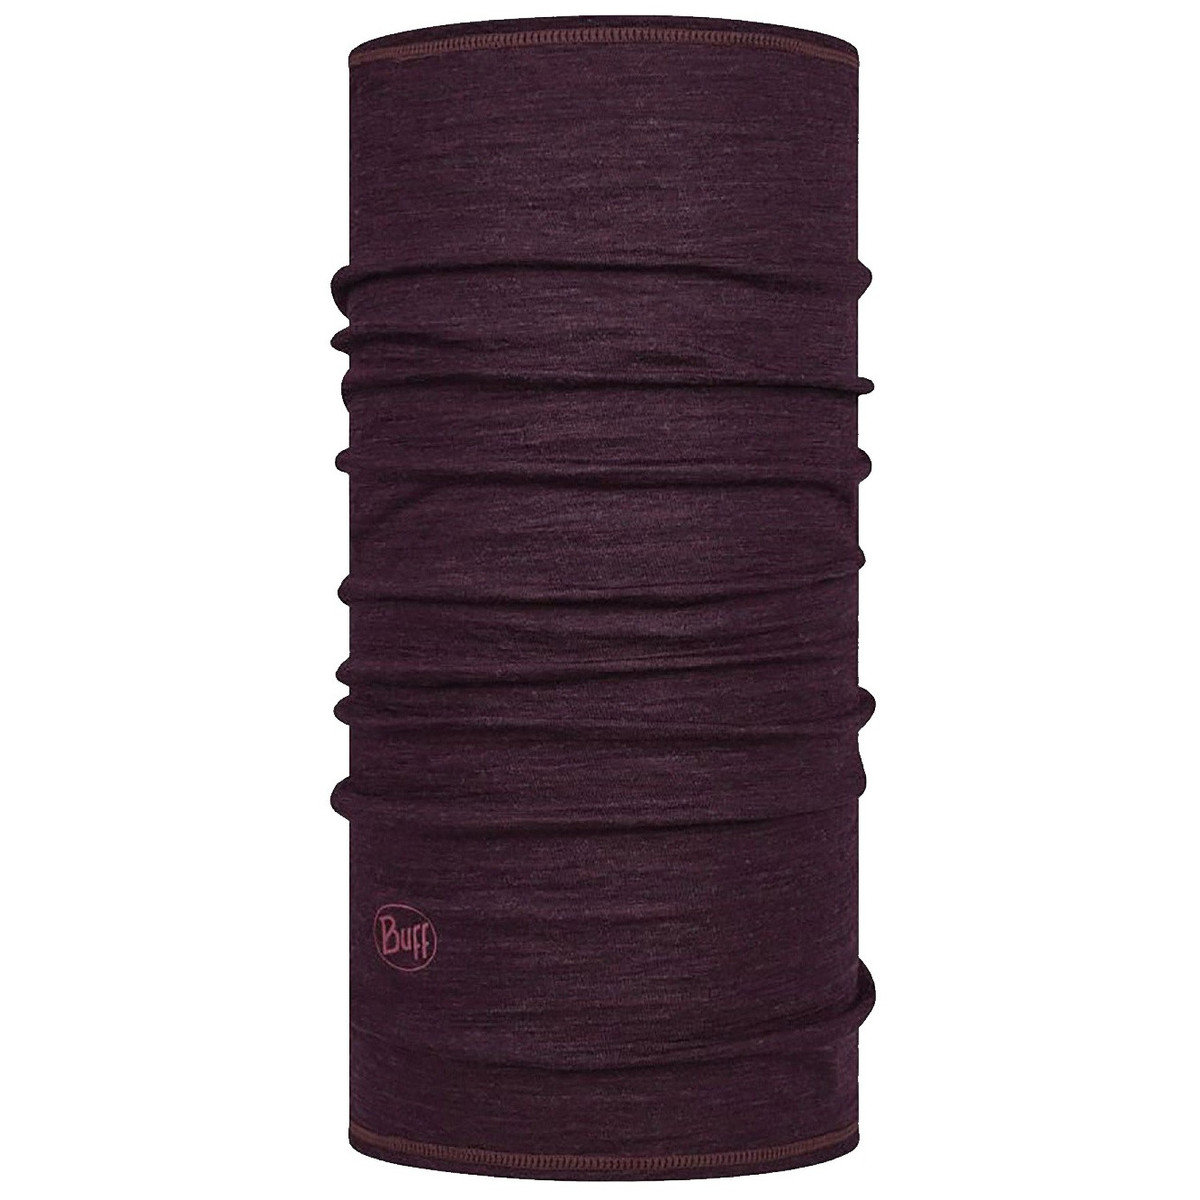 Buff Wool Lightweight - solid deep purple